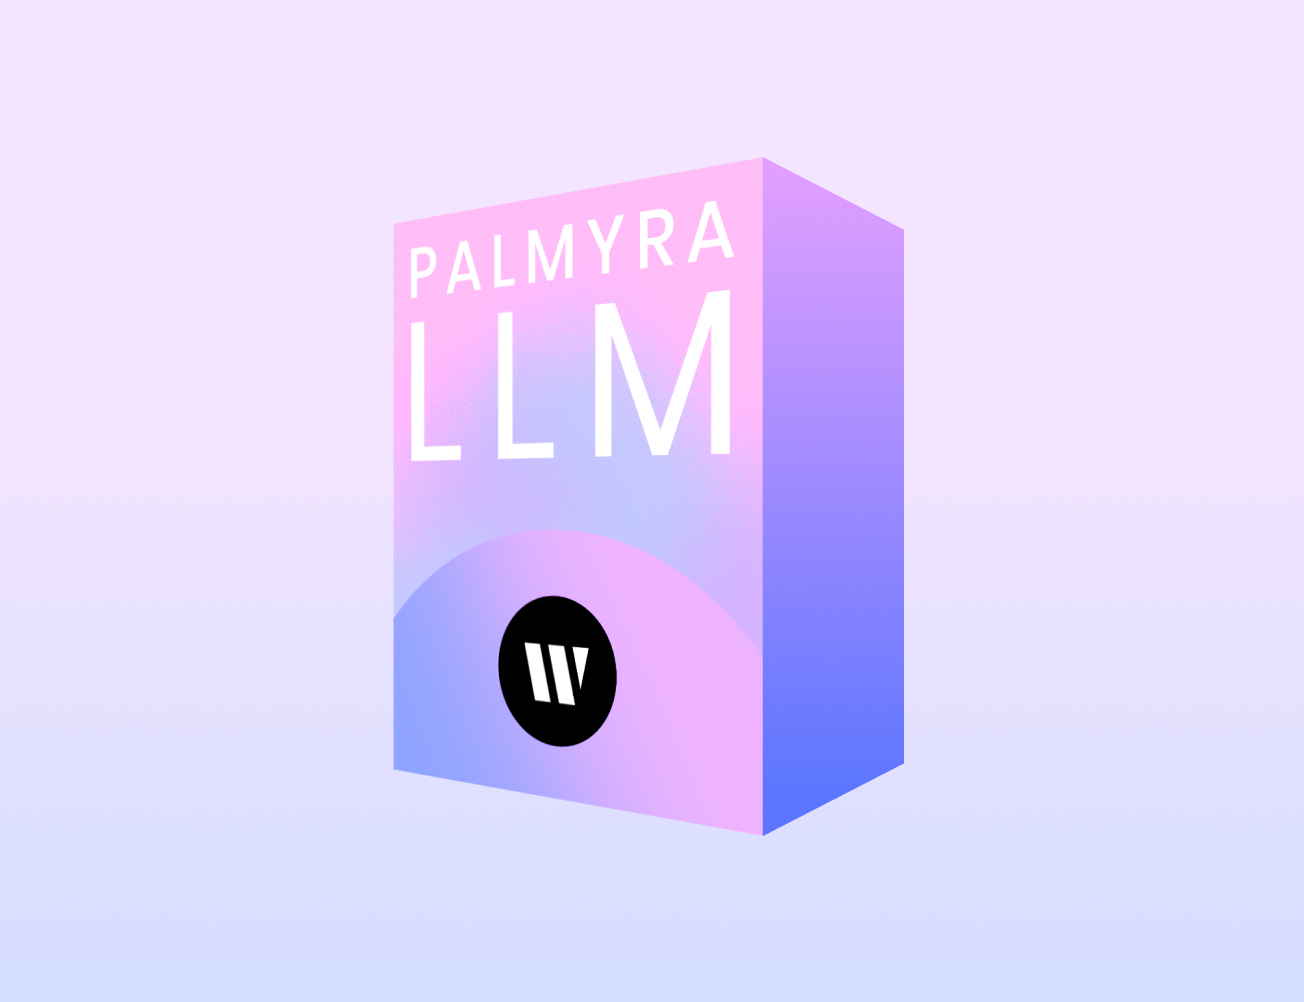 Palmyra LLM